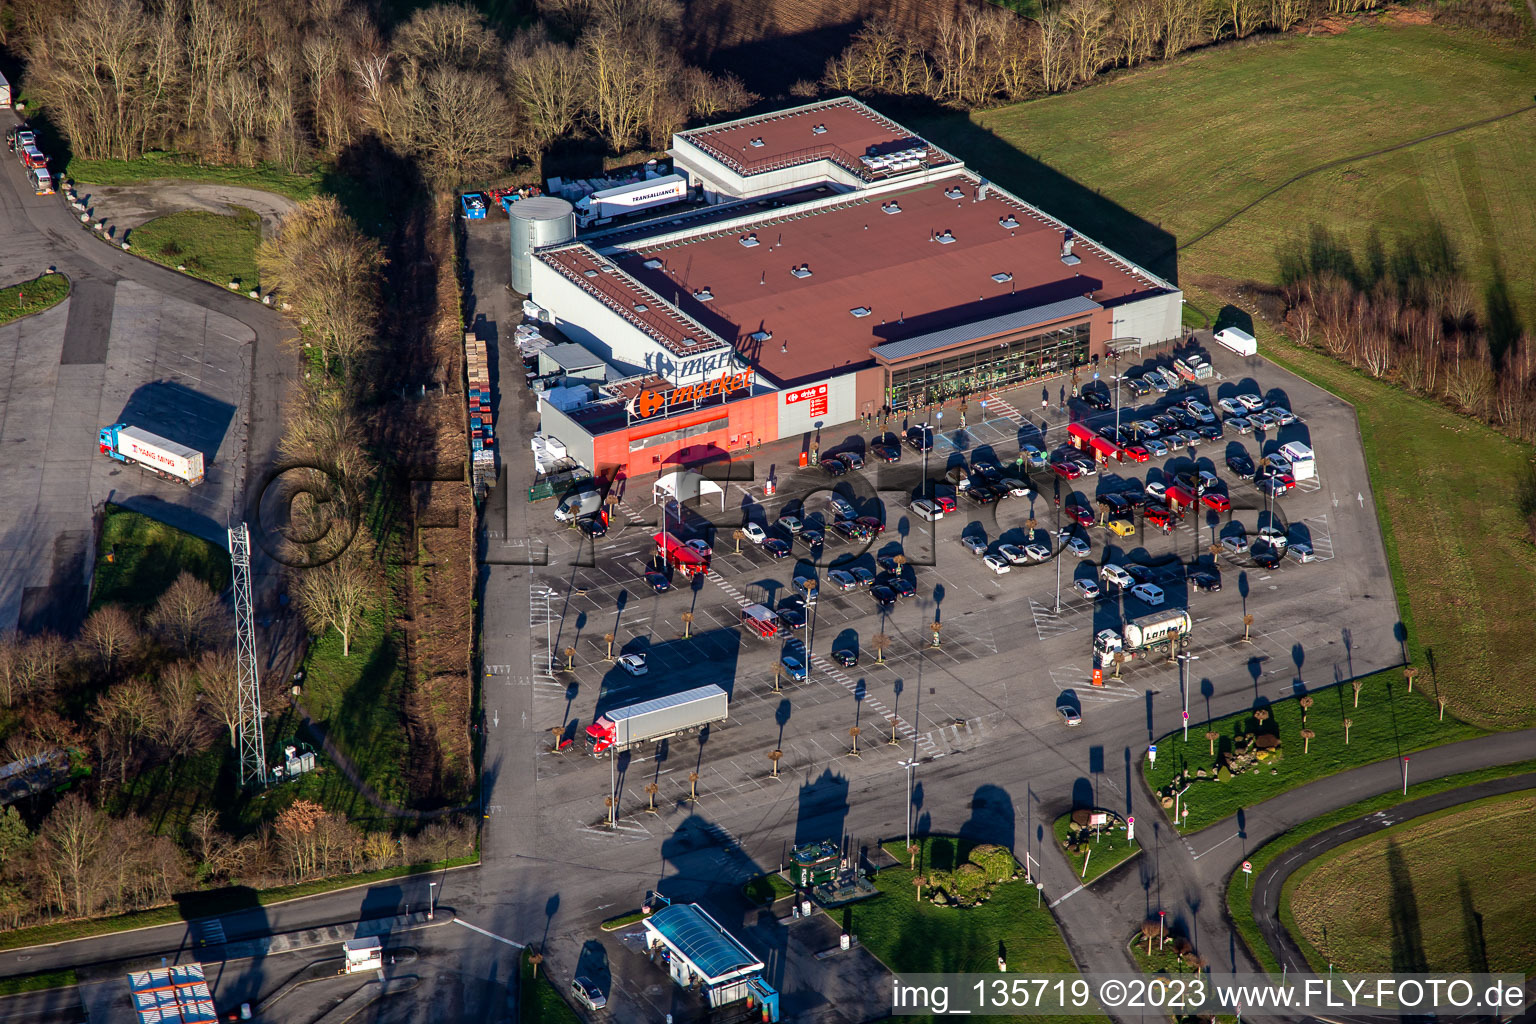 Carrefour supermarket in Scheibenhard in the state Bas-Rhin, France